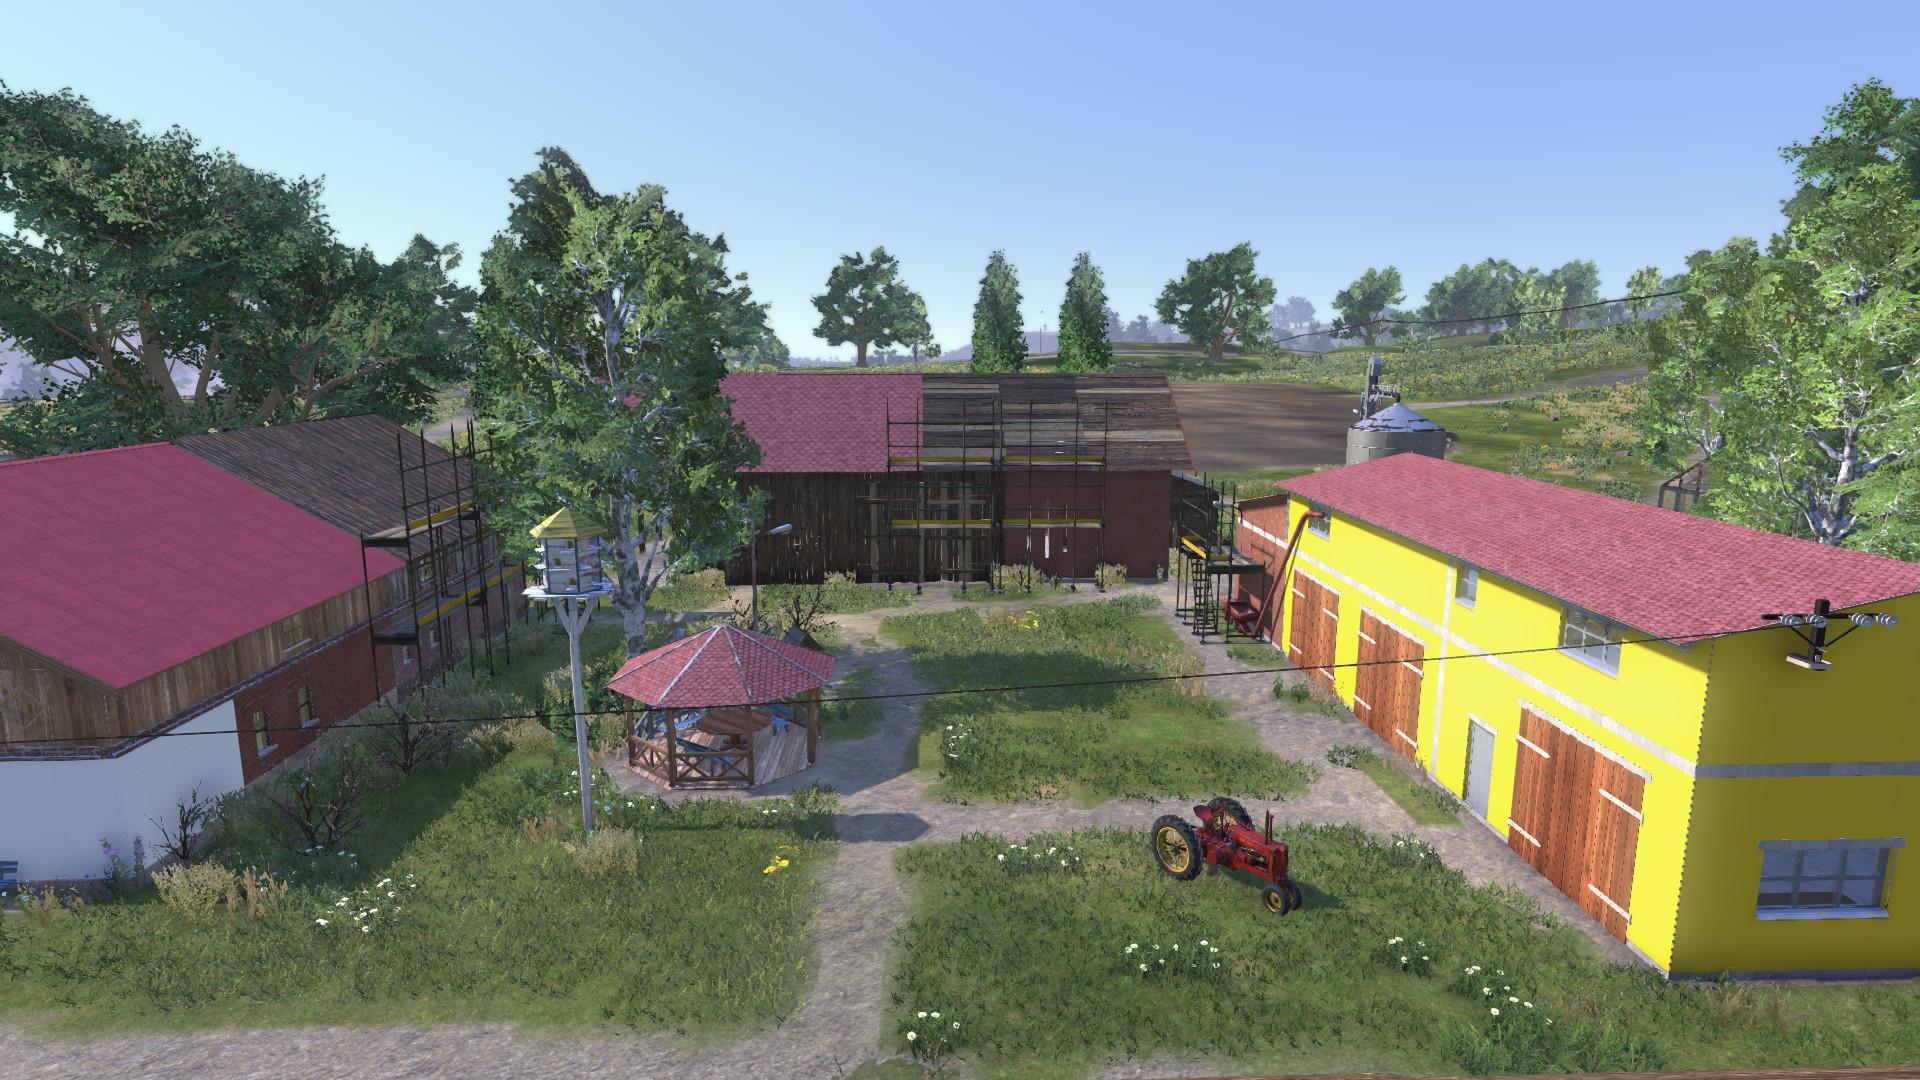 Screenshot №14 from game Farmer's Dynasty